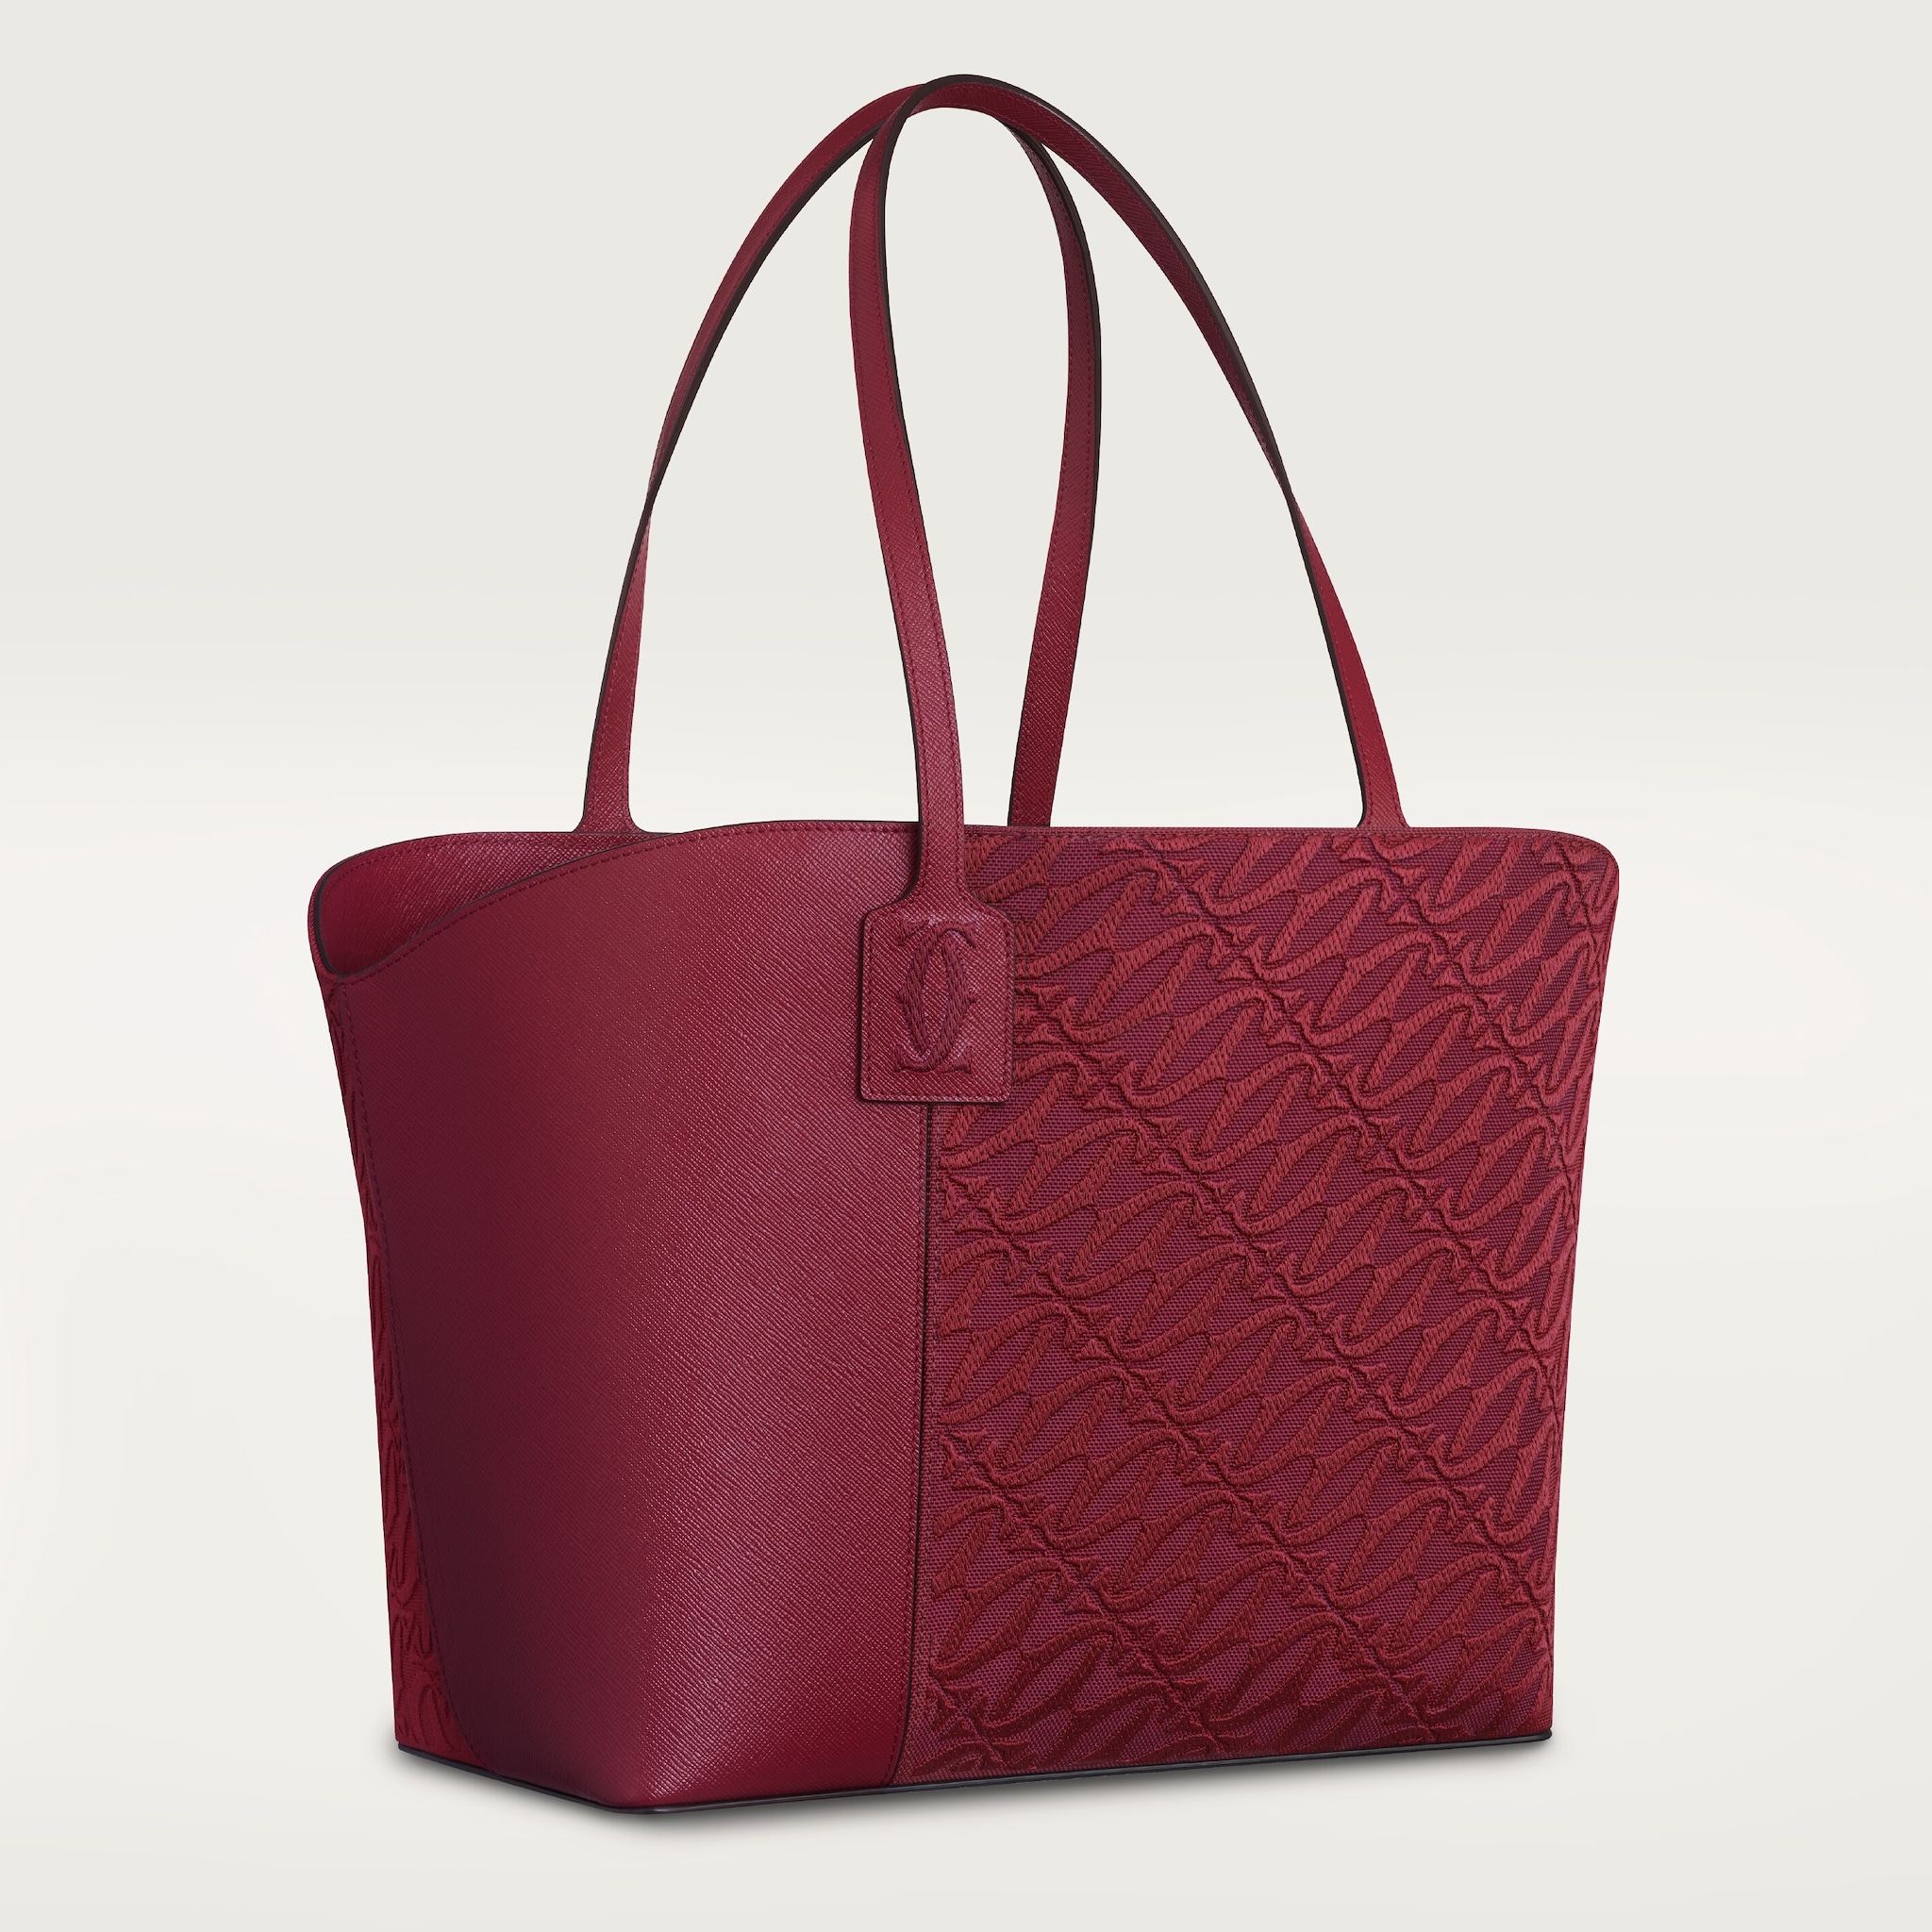 Tote bag, C de CartierCherry red textured calfskin and embroidery, golden finish